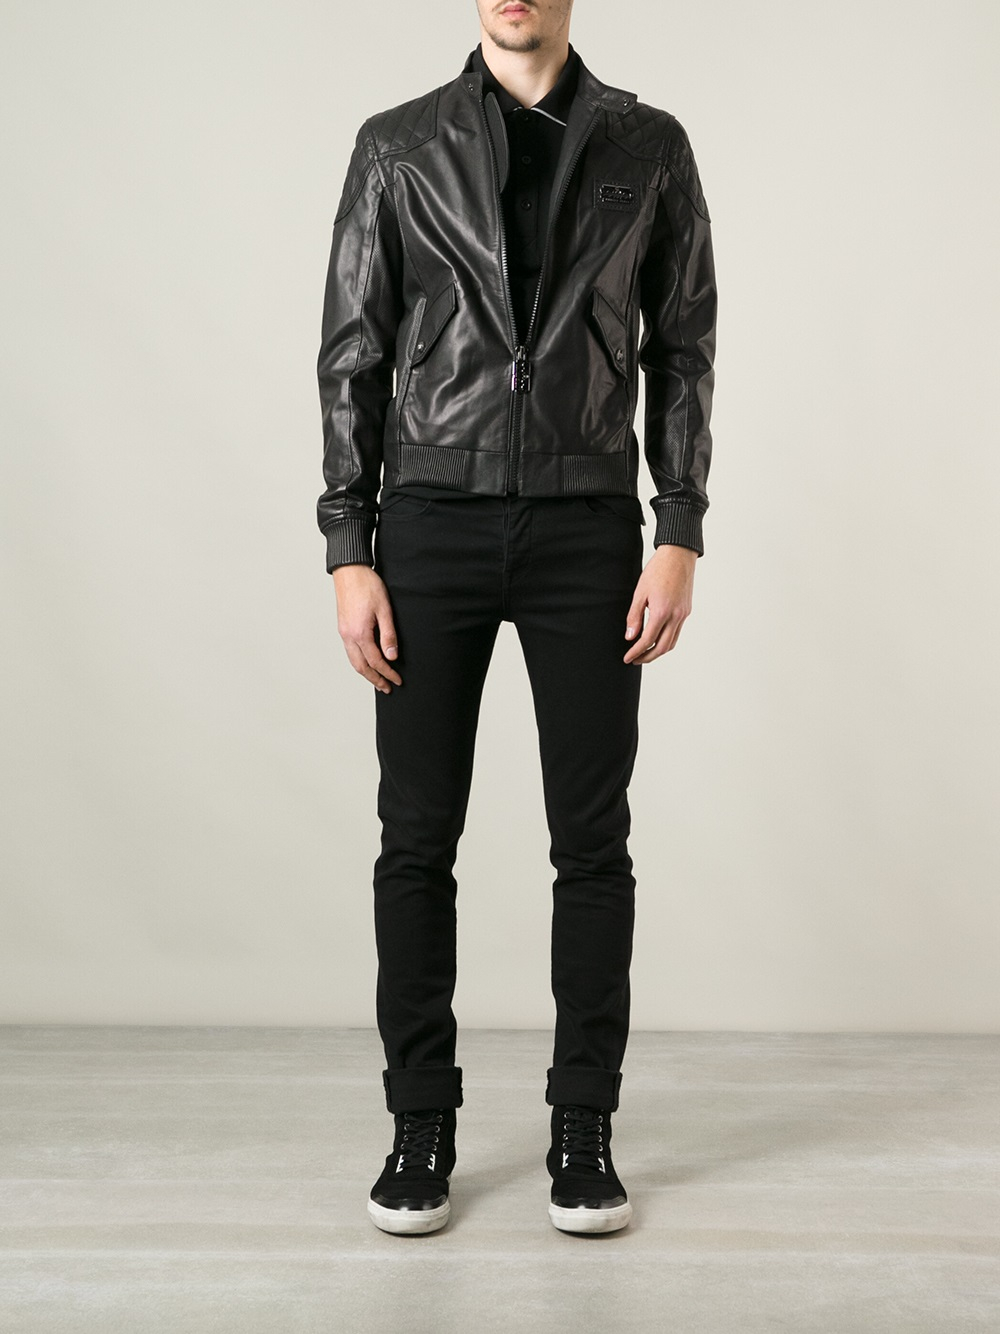 Lyst - Philipp Plein Leather Biker Jacket in Black for Men